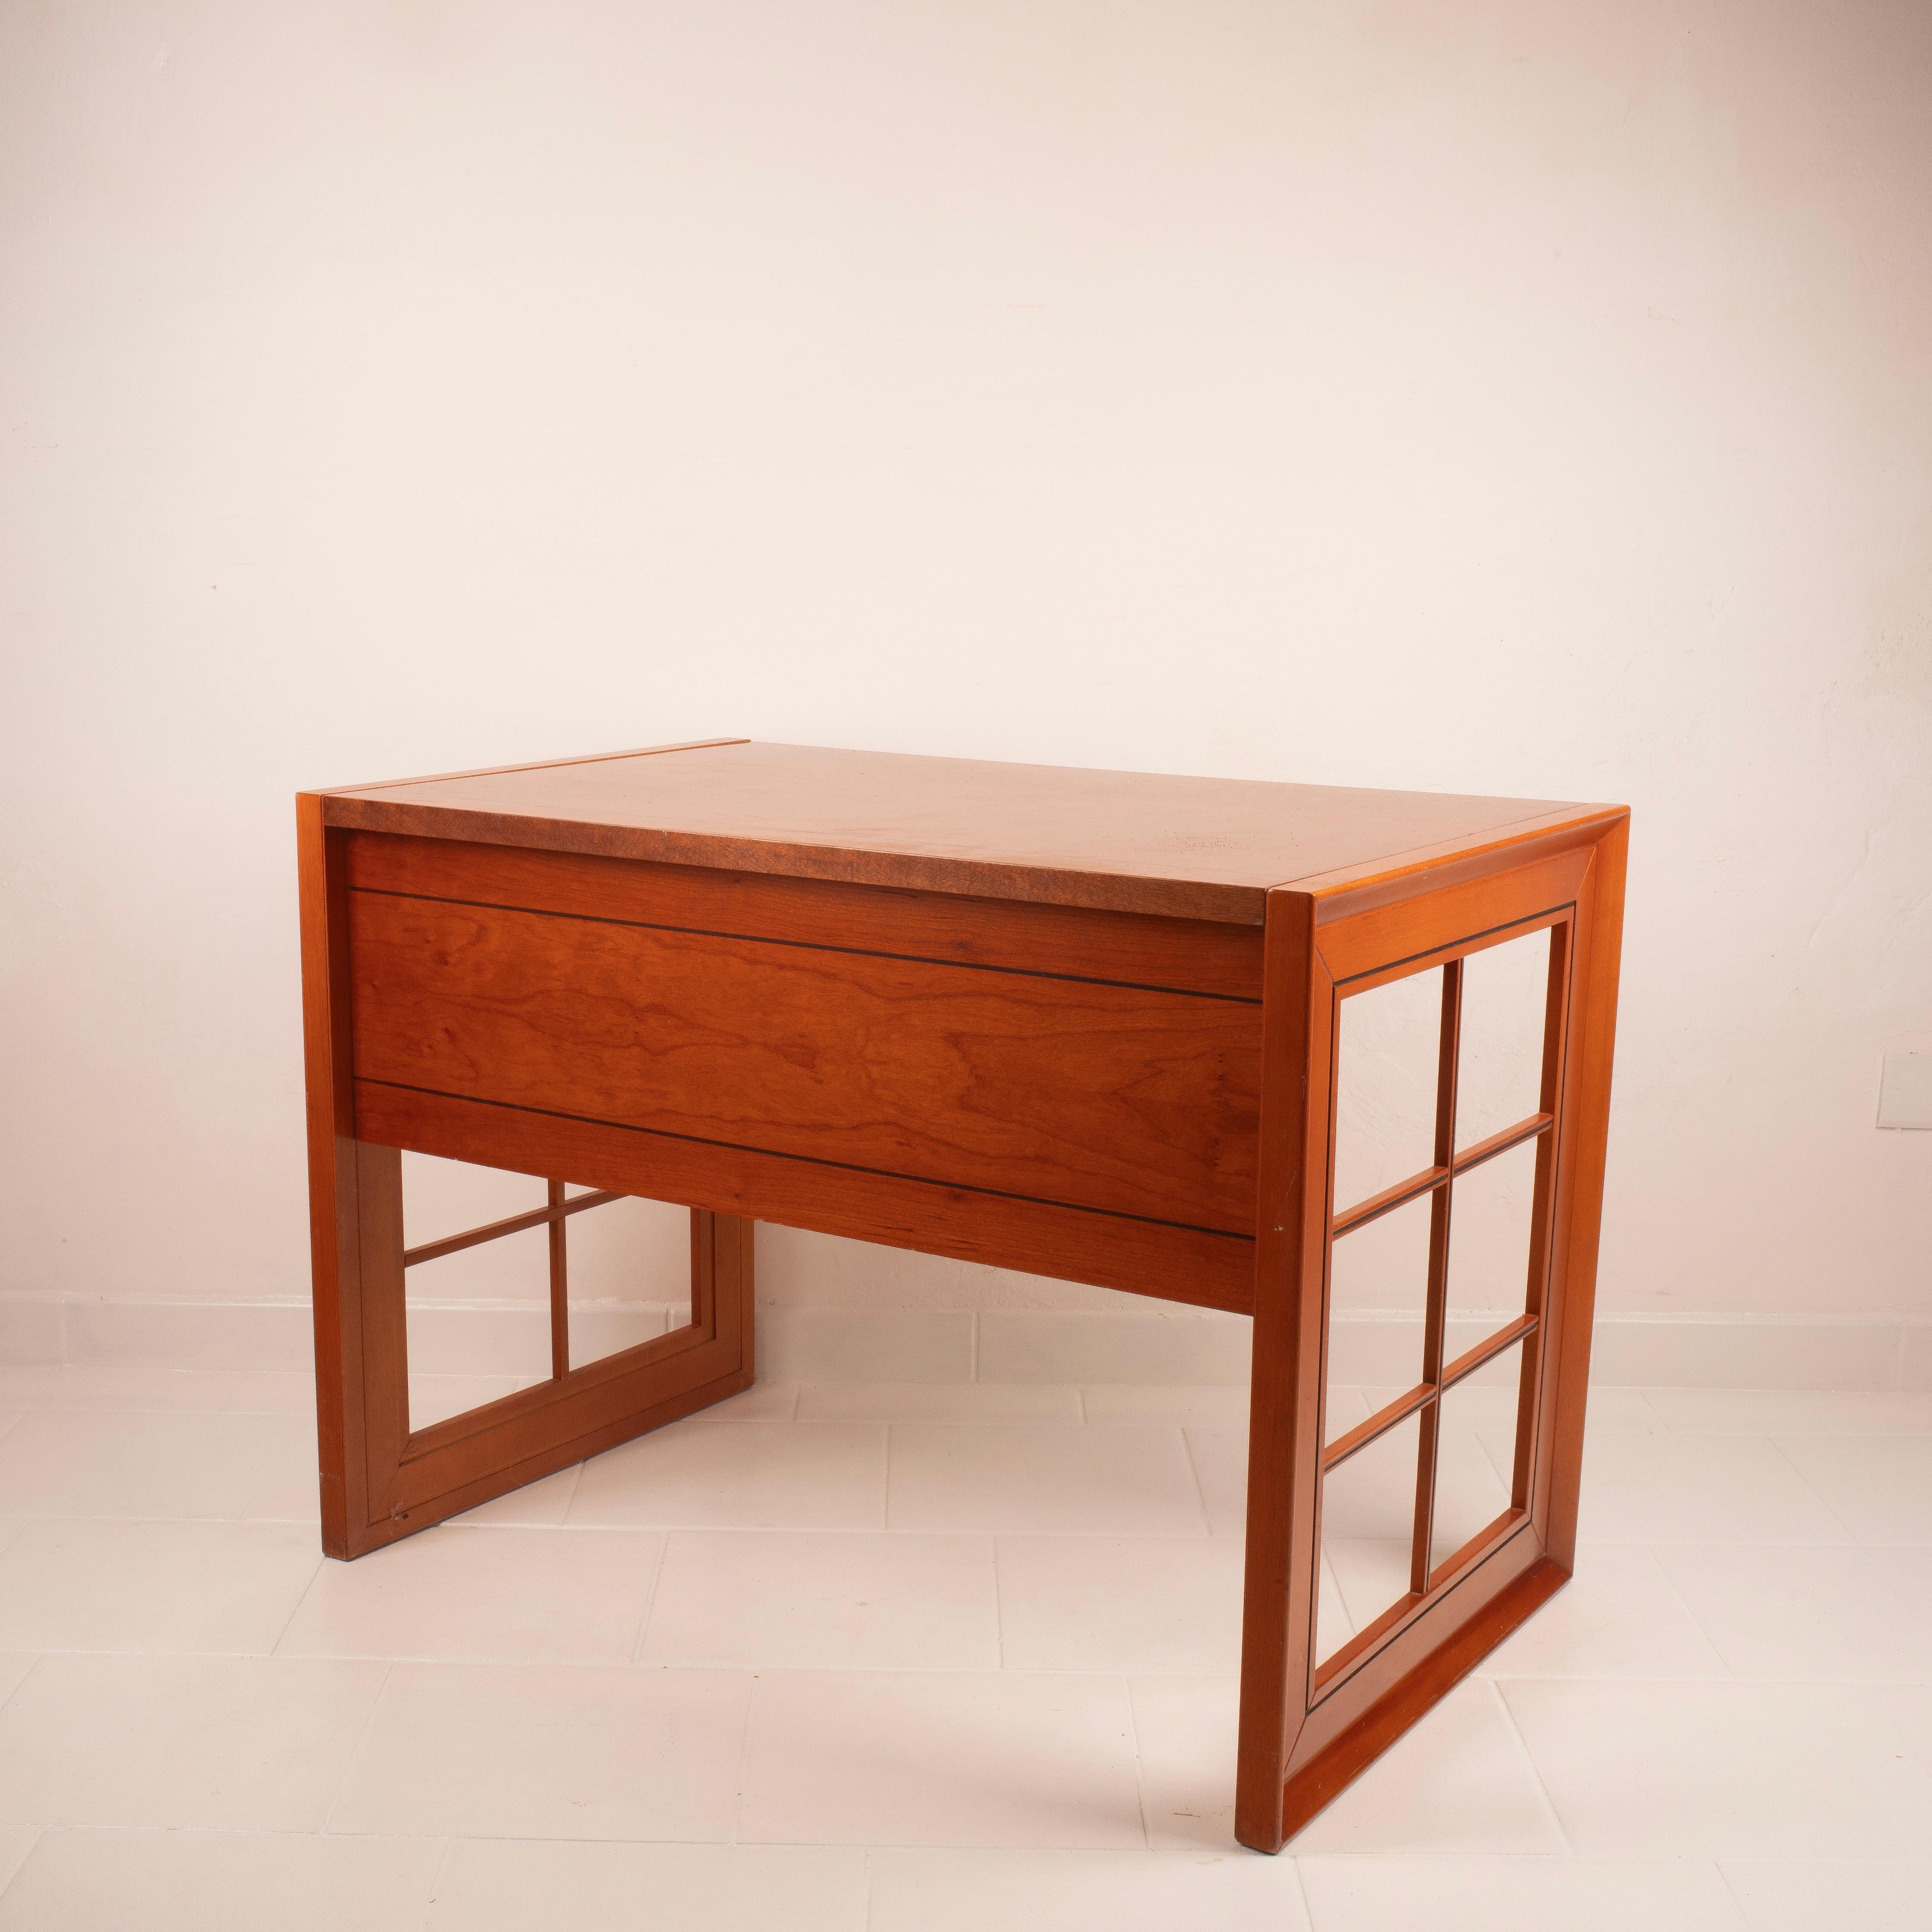 Italian Linea Mobili desk model 